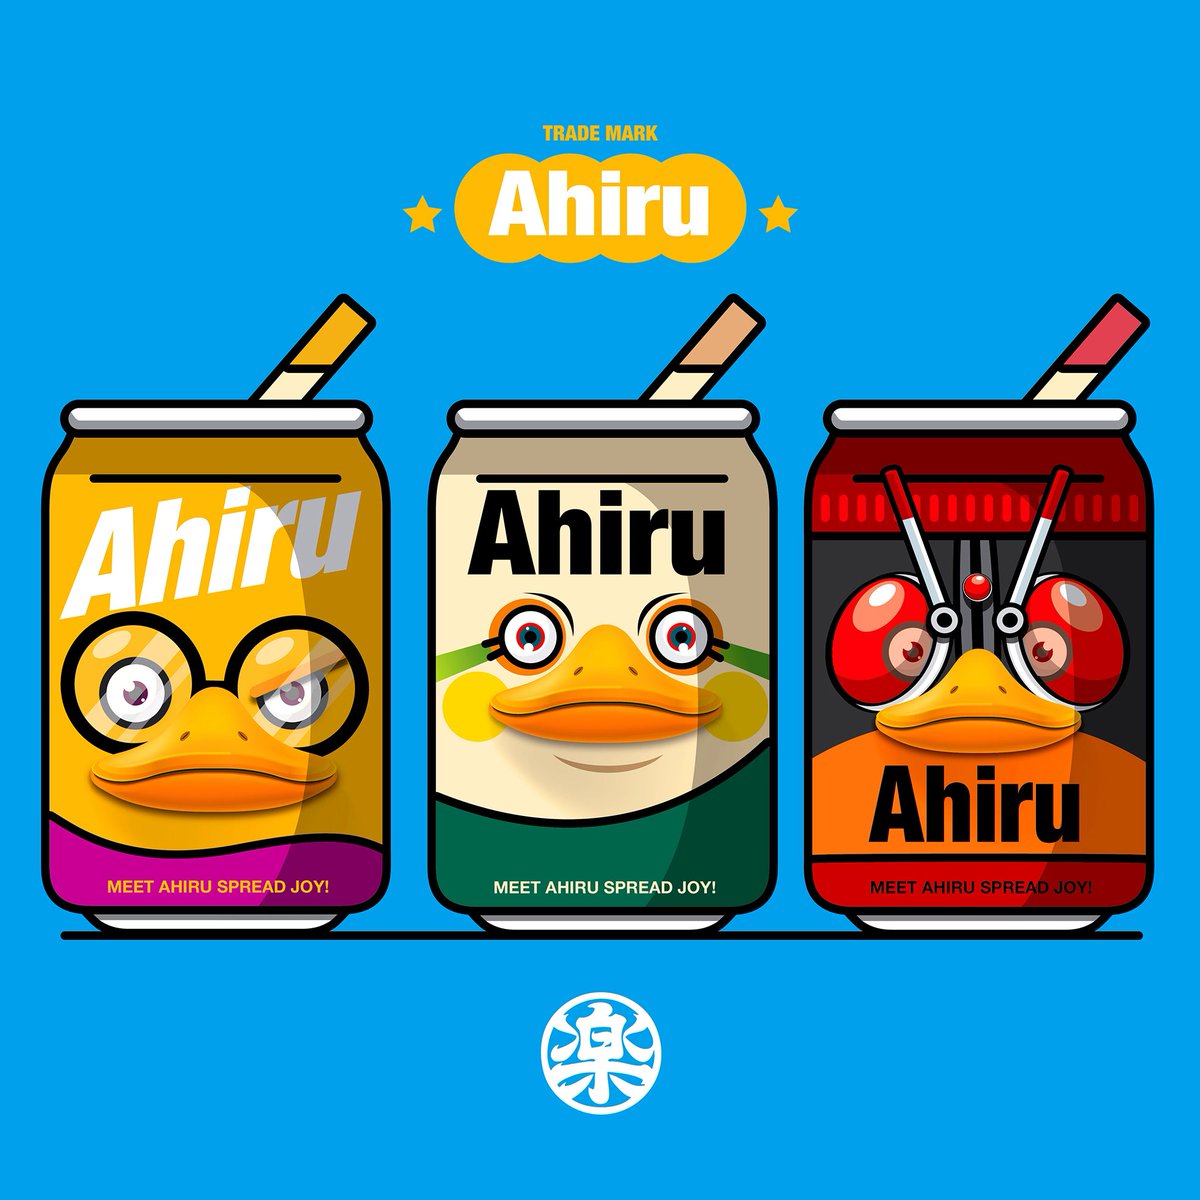 Ahiru: spread happiness!
opensea.io/collection/ahi…